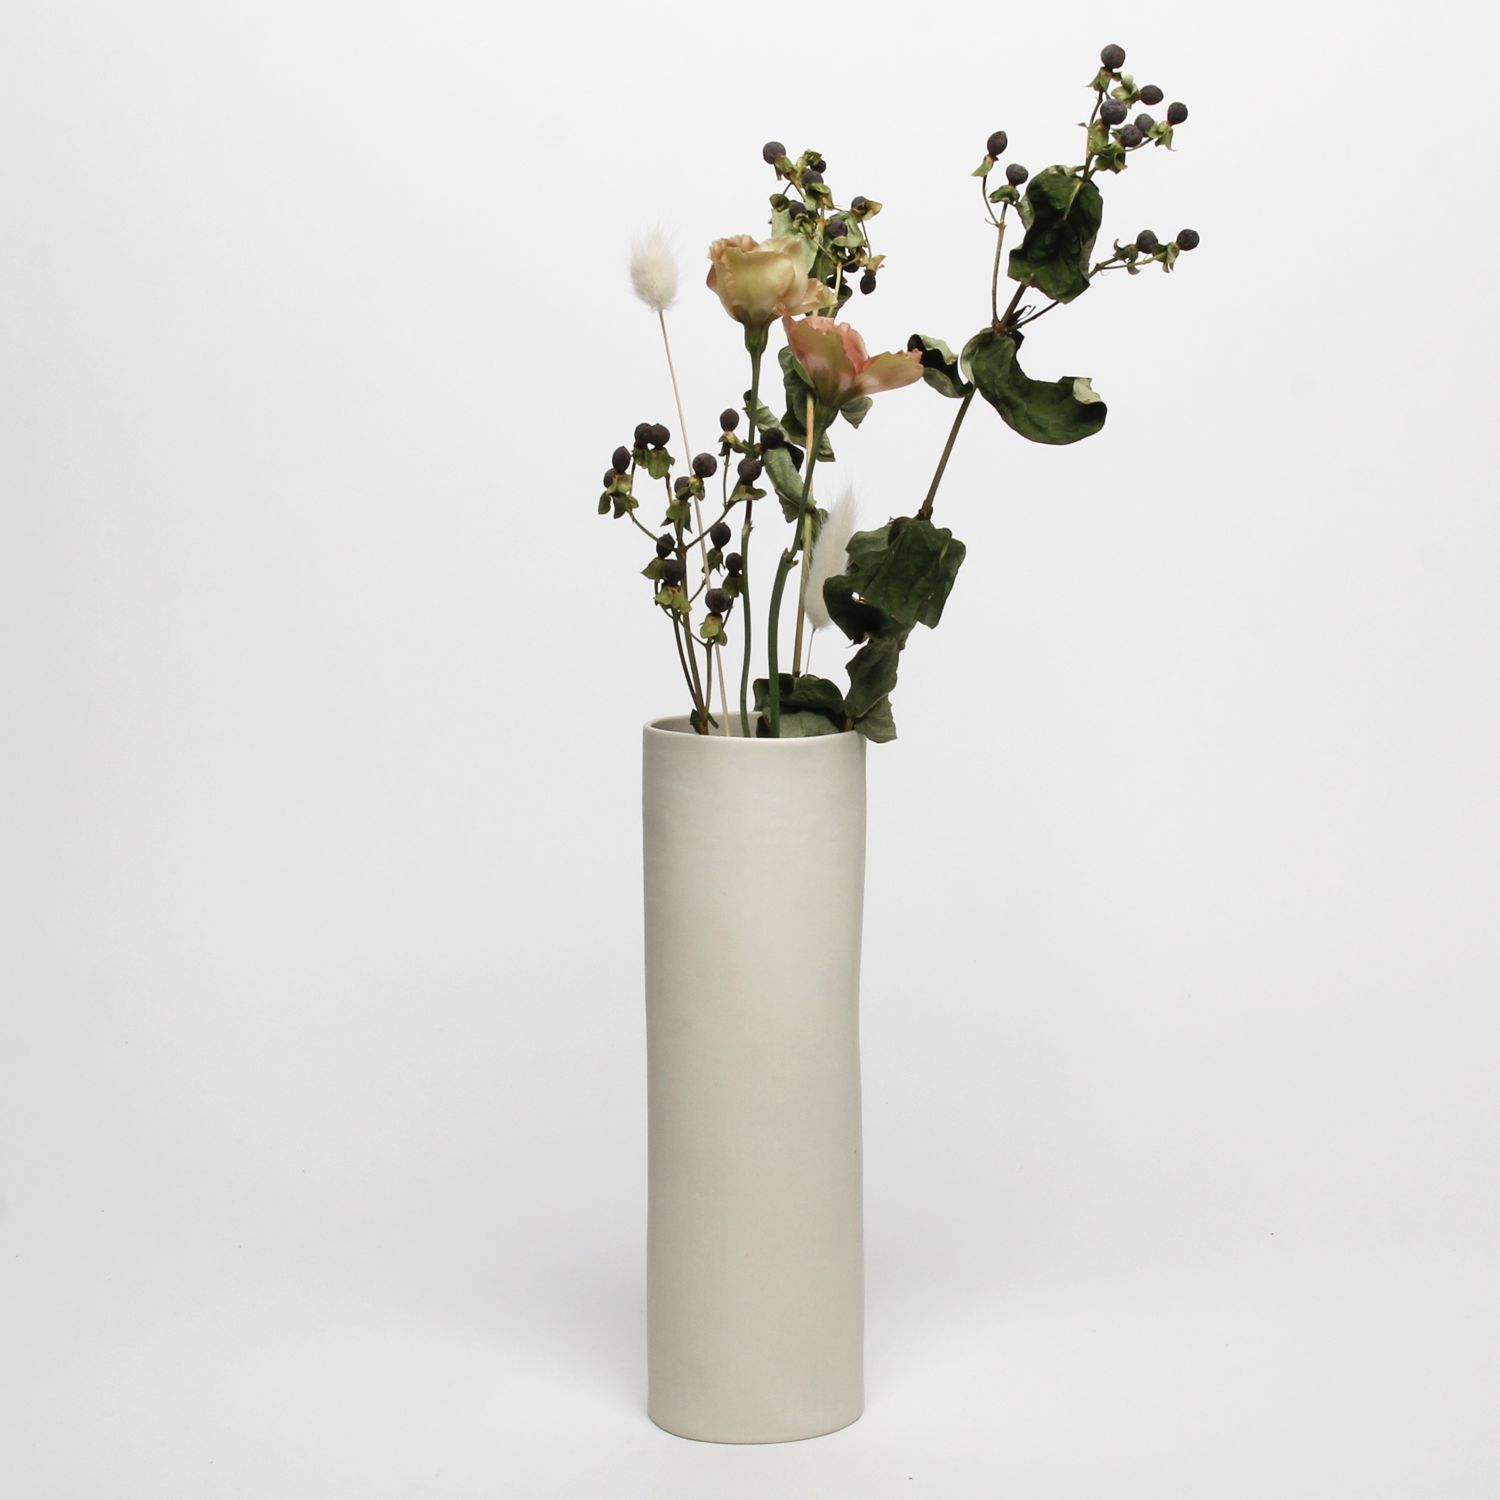 Queenie Kun Xu: Slab Vase Product Image 1 of 2